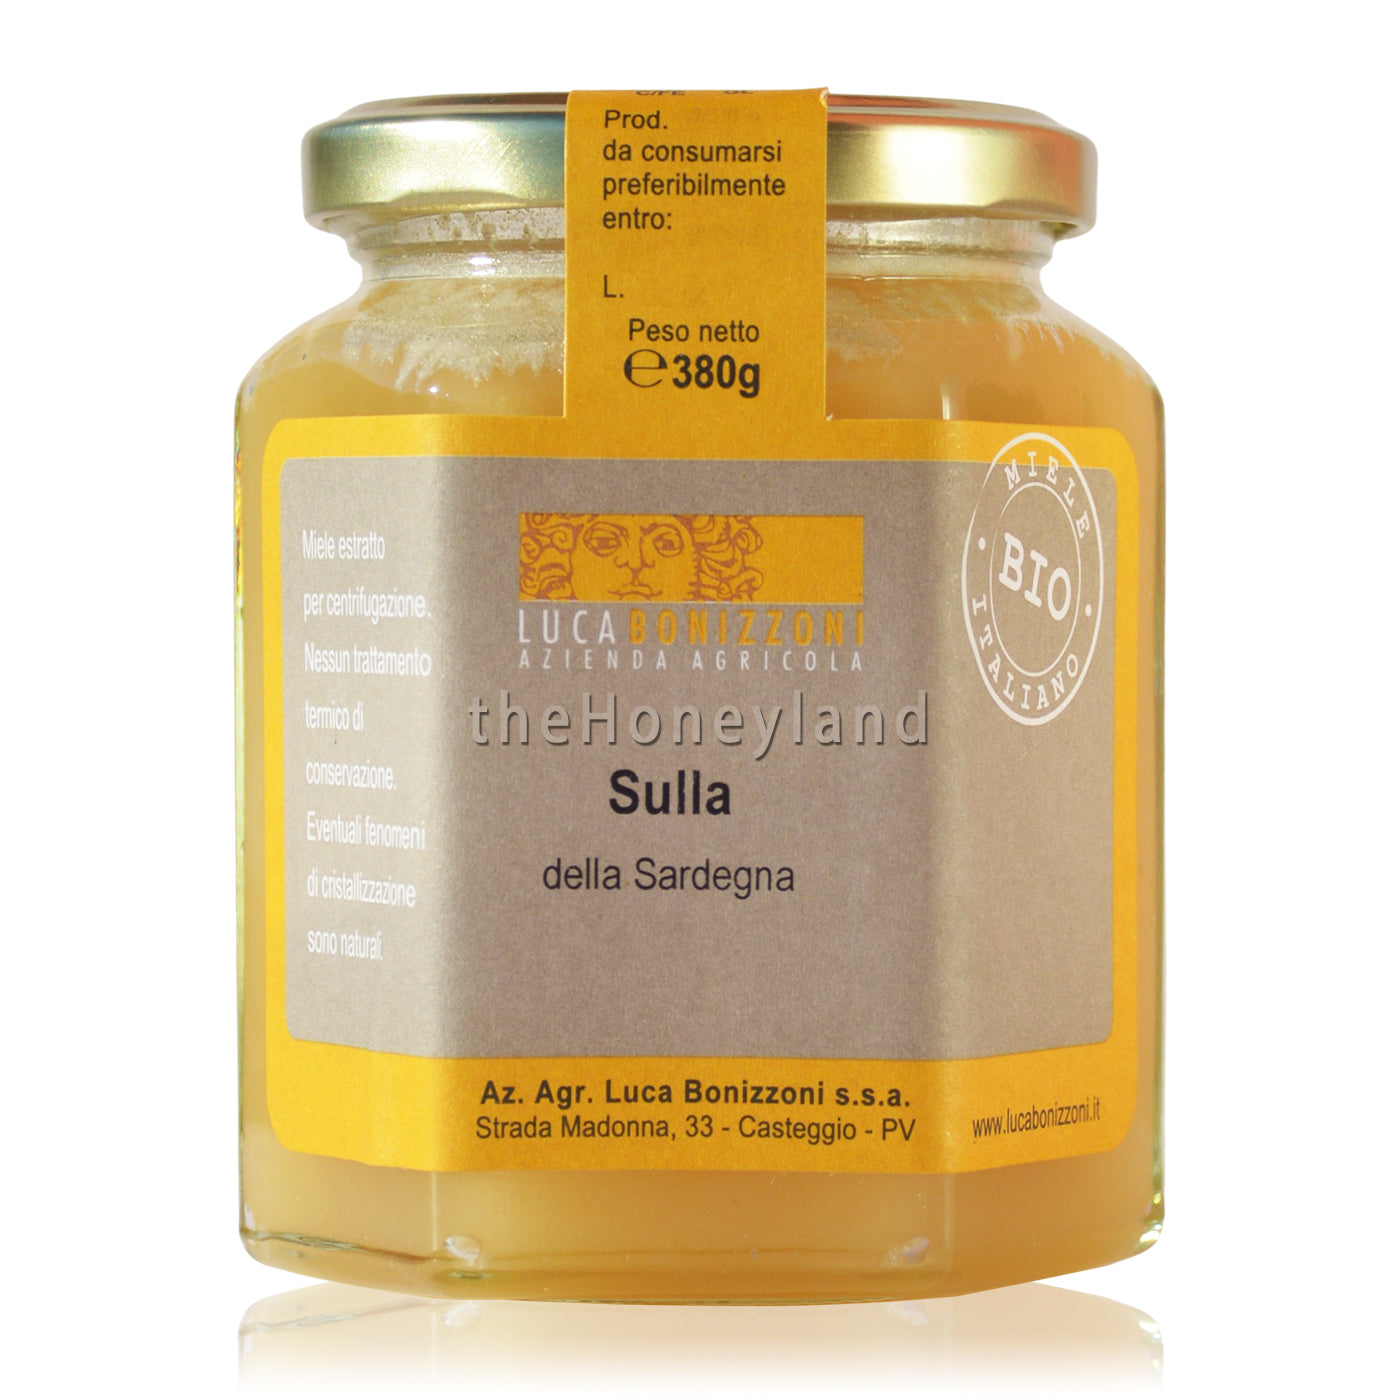 Organic sulla honey from Sardinia